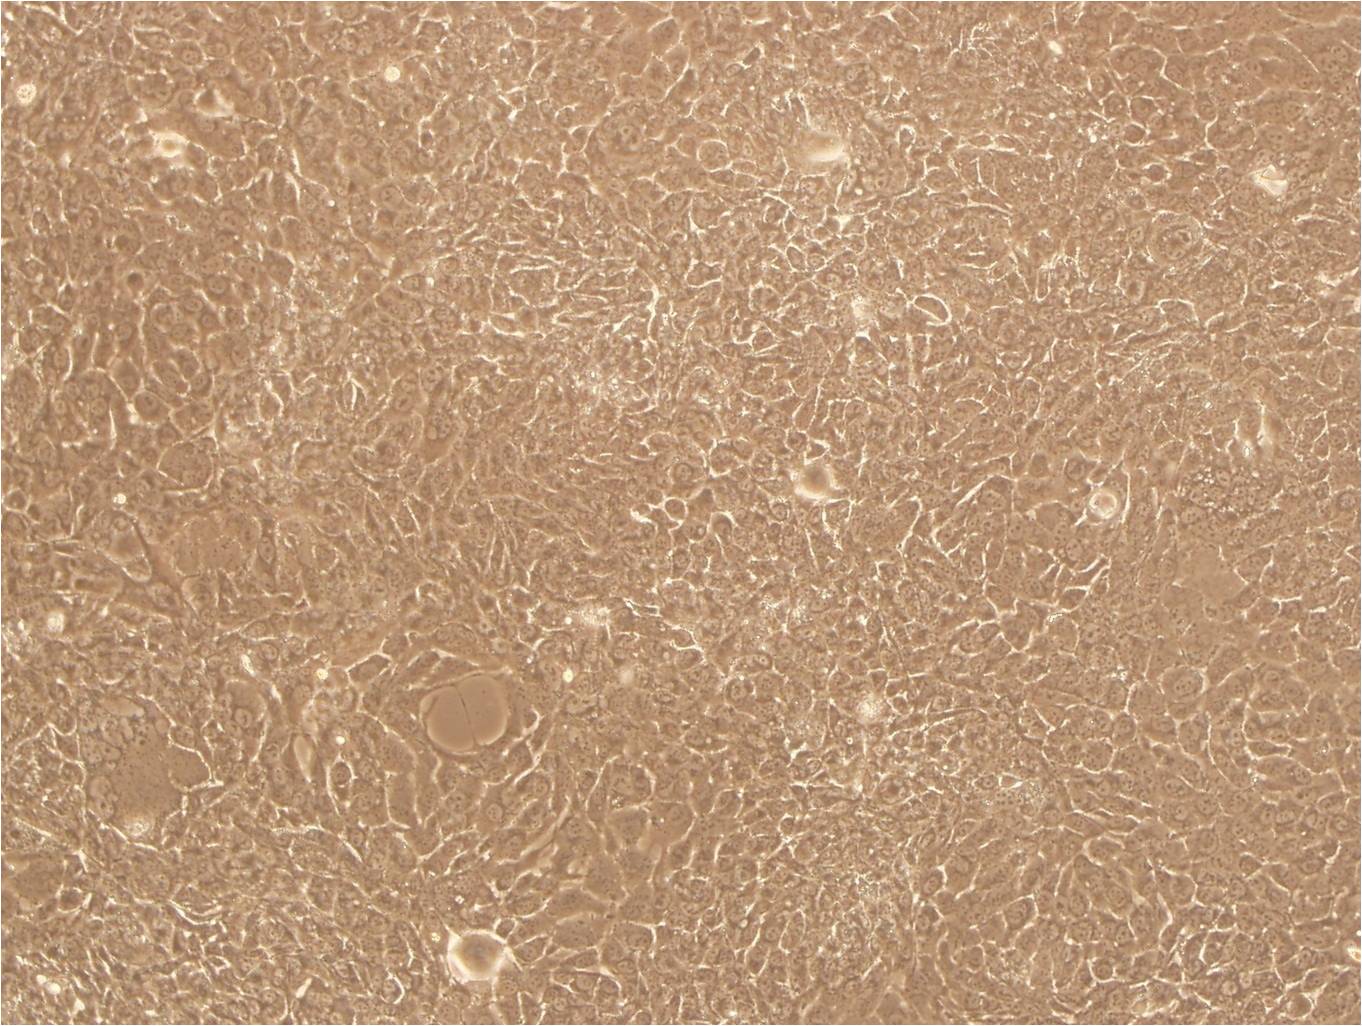 Sp2/0-Ag14:小鼠骨髓瘤复苏细胞(提供STR鉴定图谱),Sp2/0-Ag14